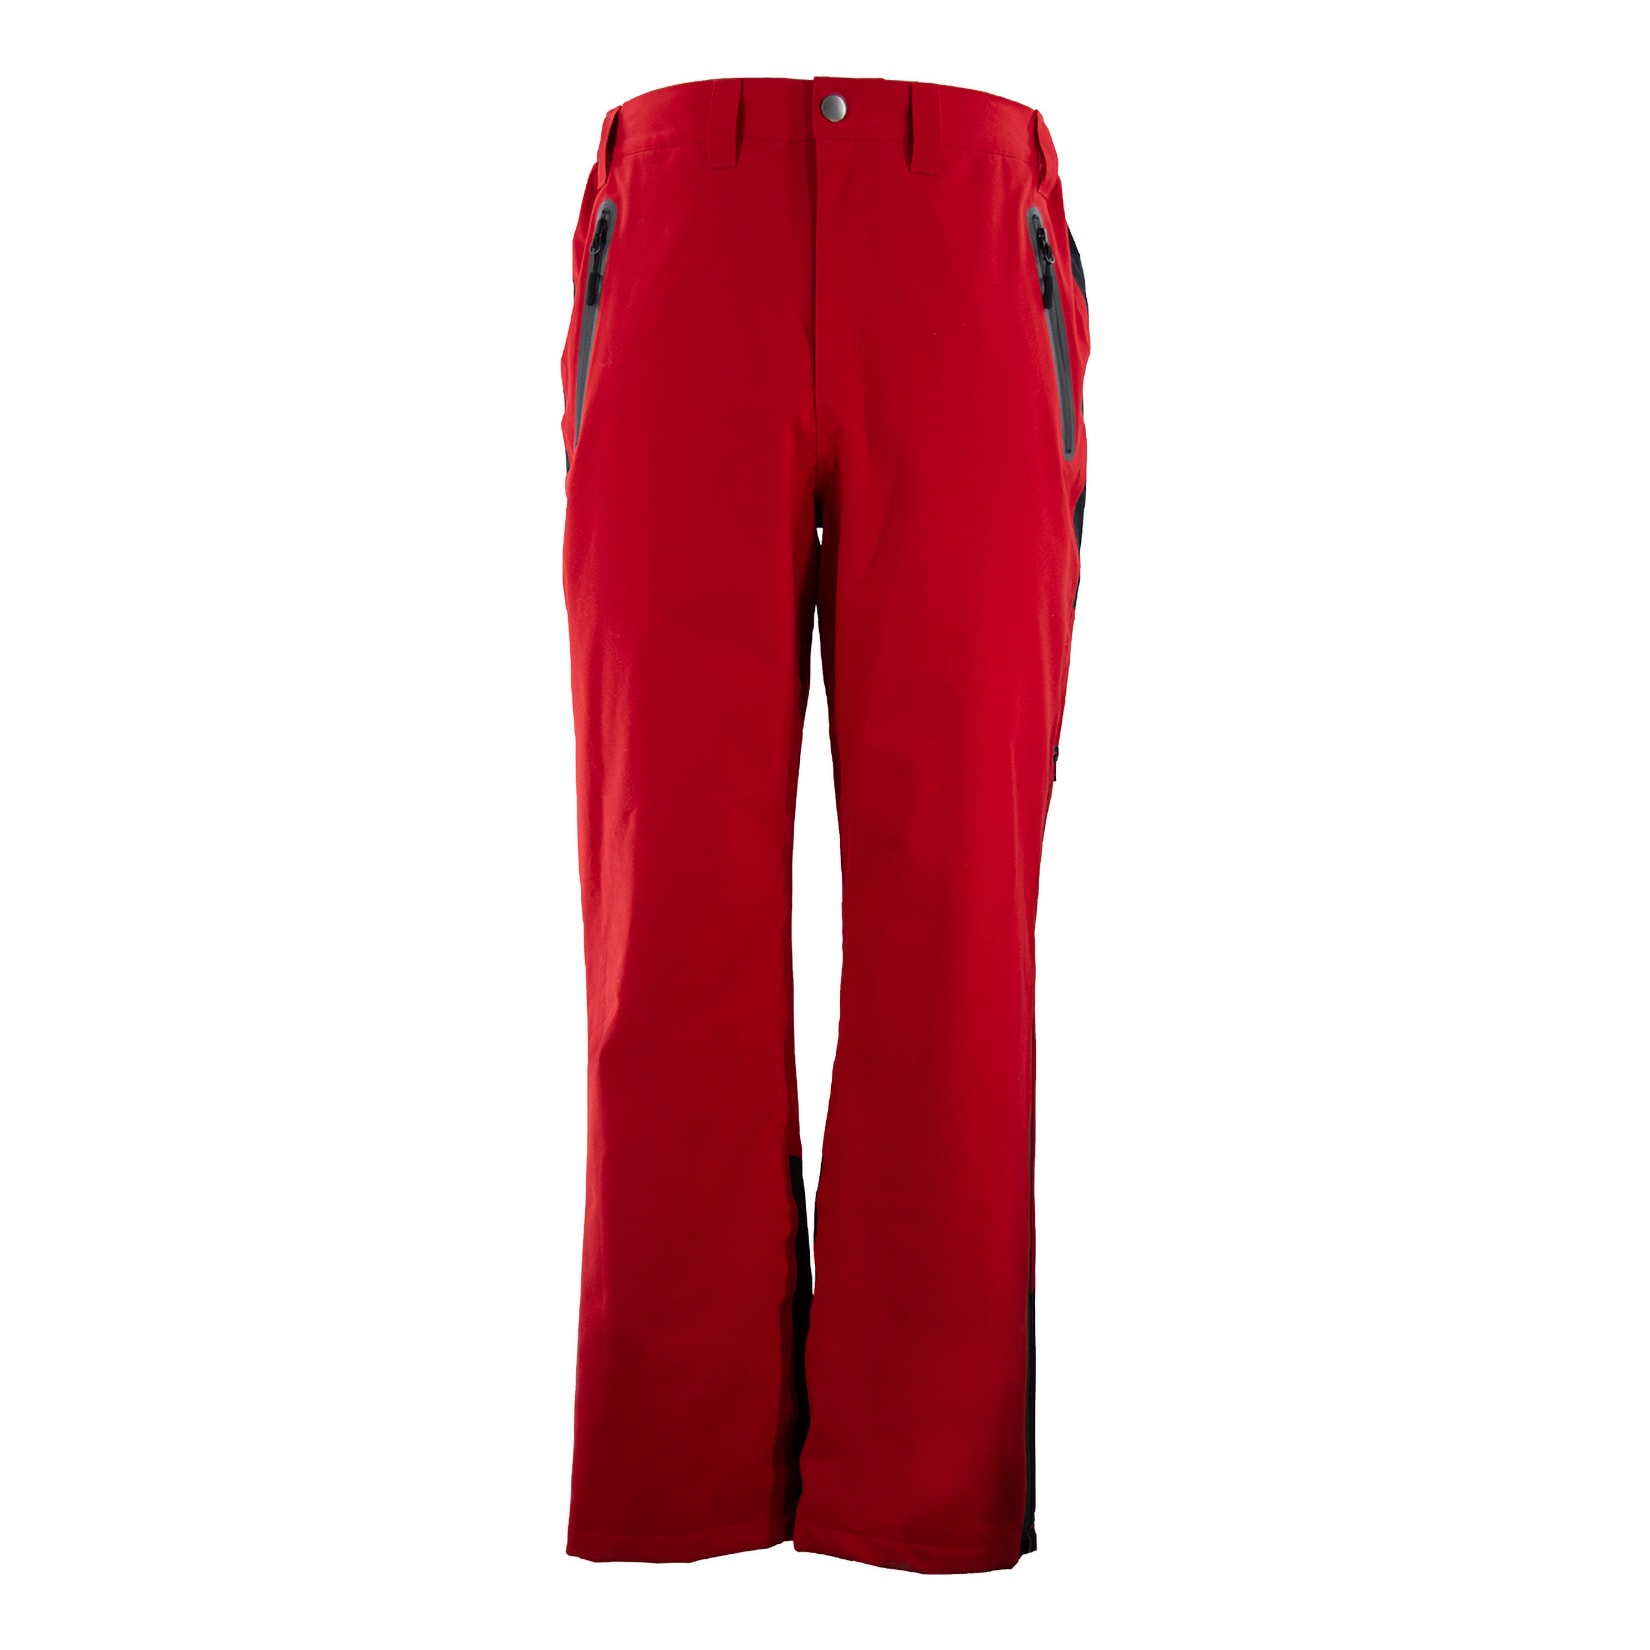 TrueTimber® Men’s Longtail Pants - Red Hot/Black